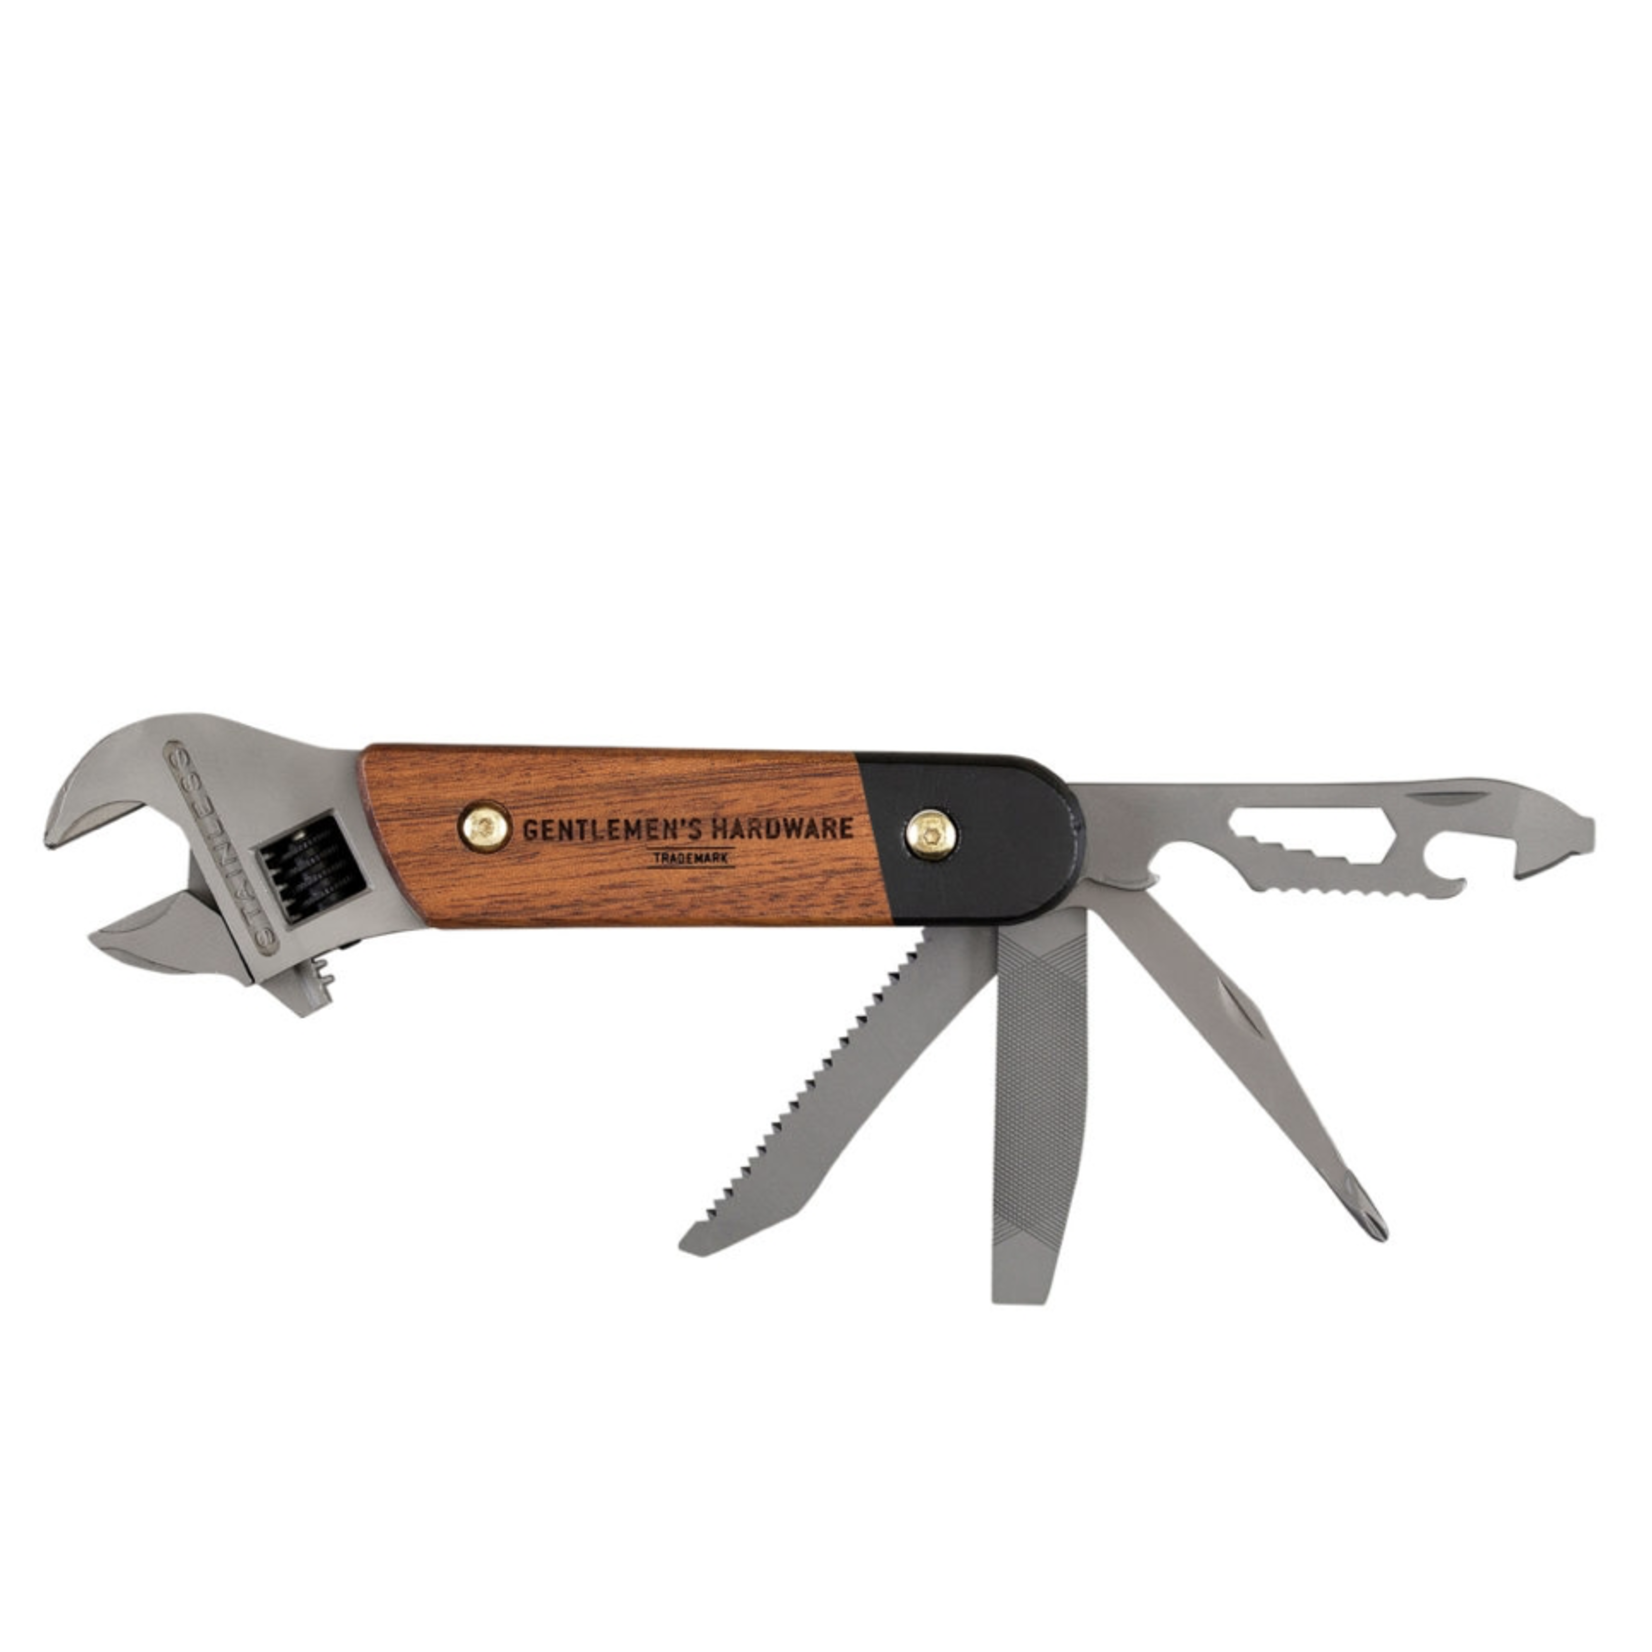 Gentlemen’s Hardware Wrench Multi Tool Wood Handles & Titanium Finish